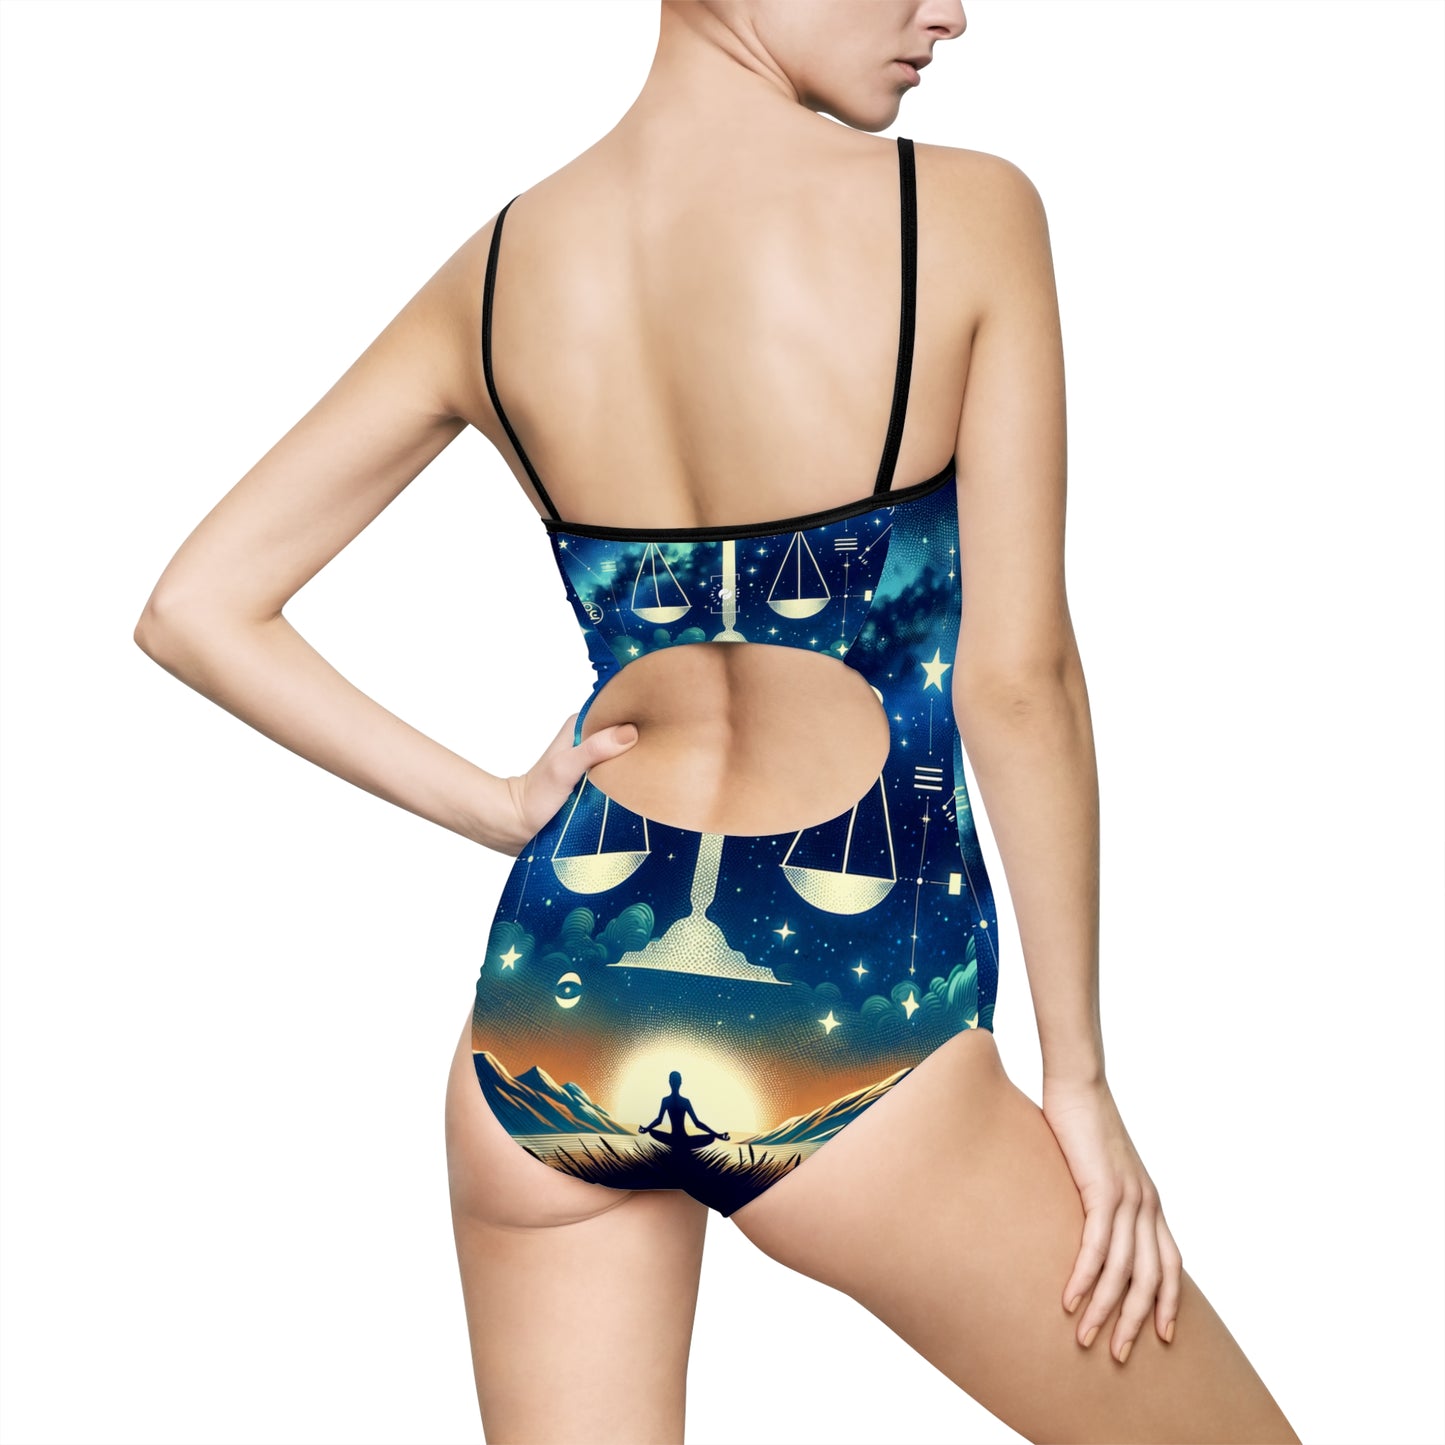 Celestial Libra - Openback Swimsuit